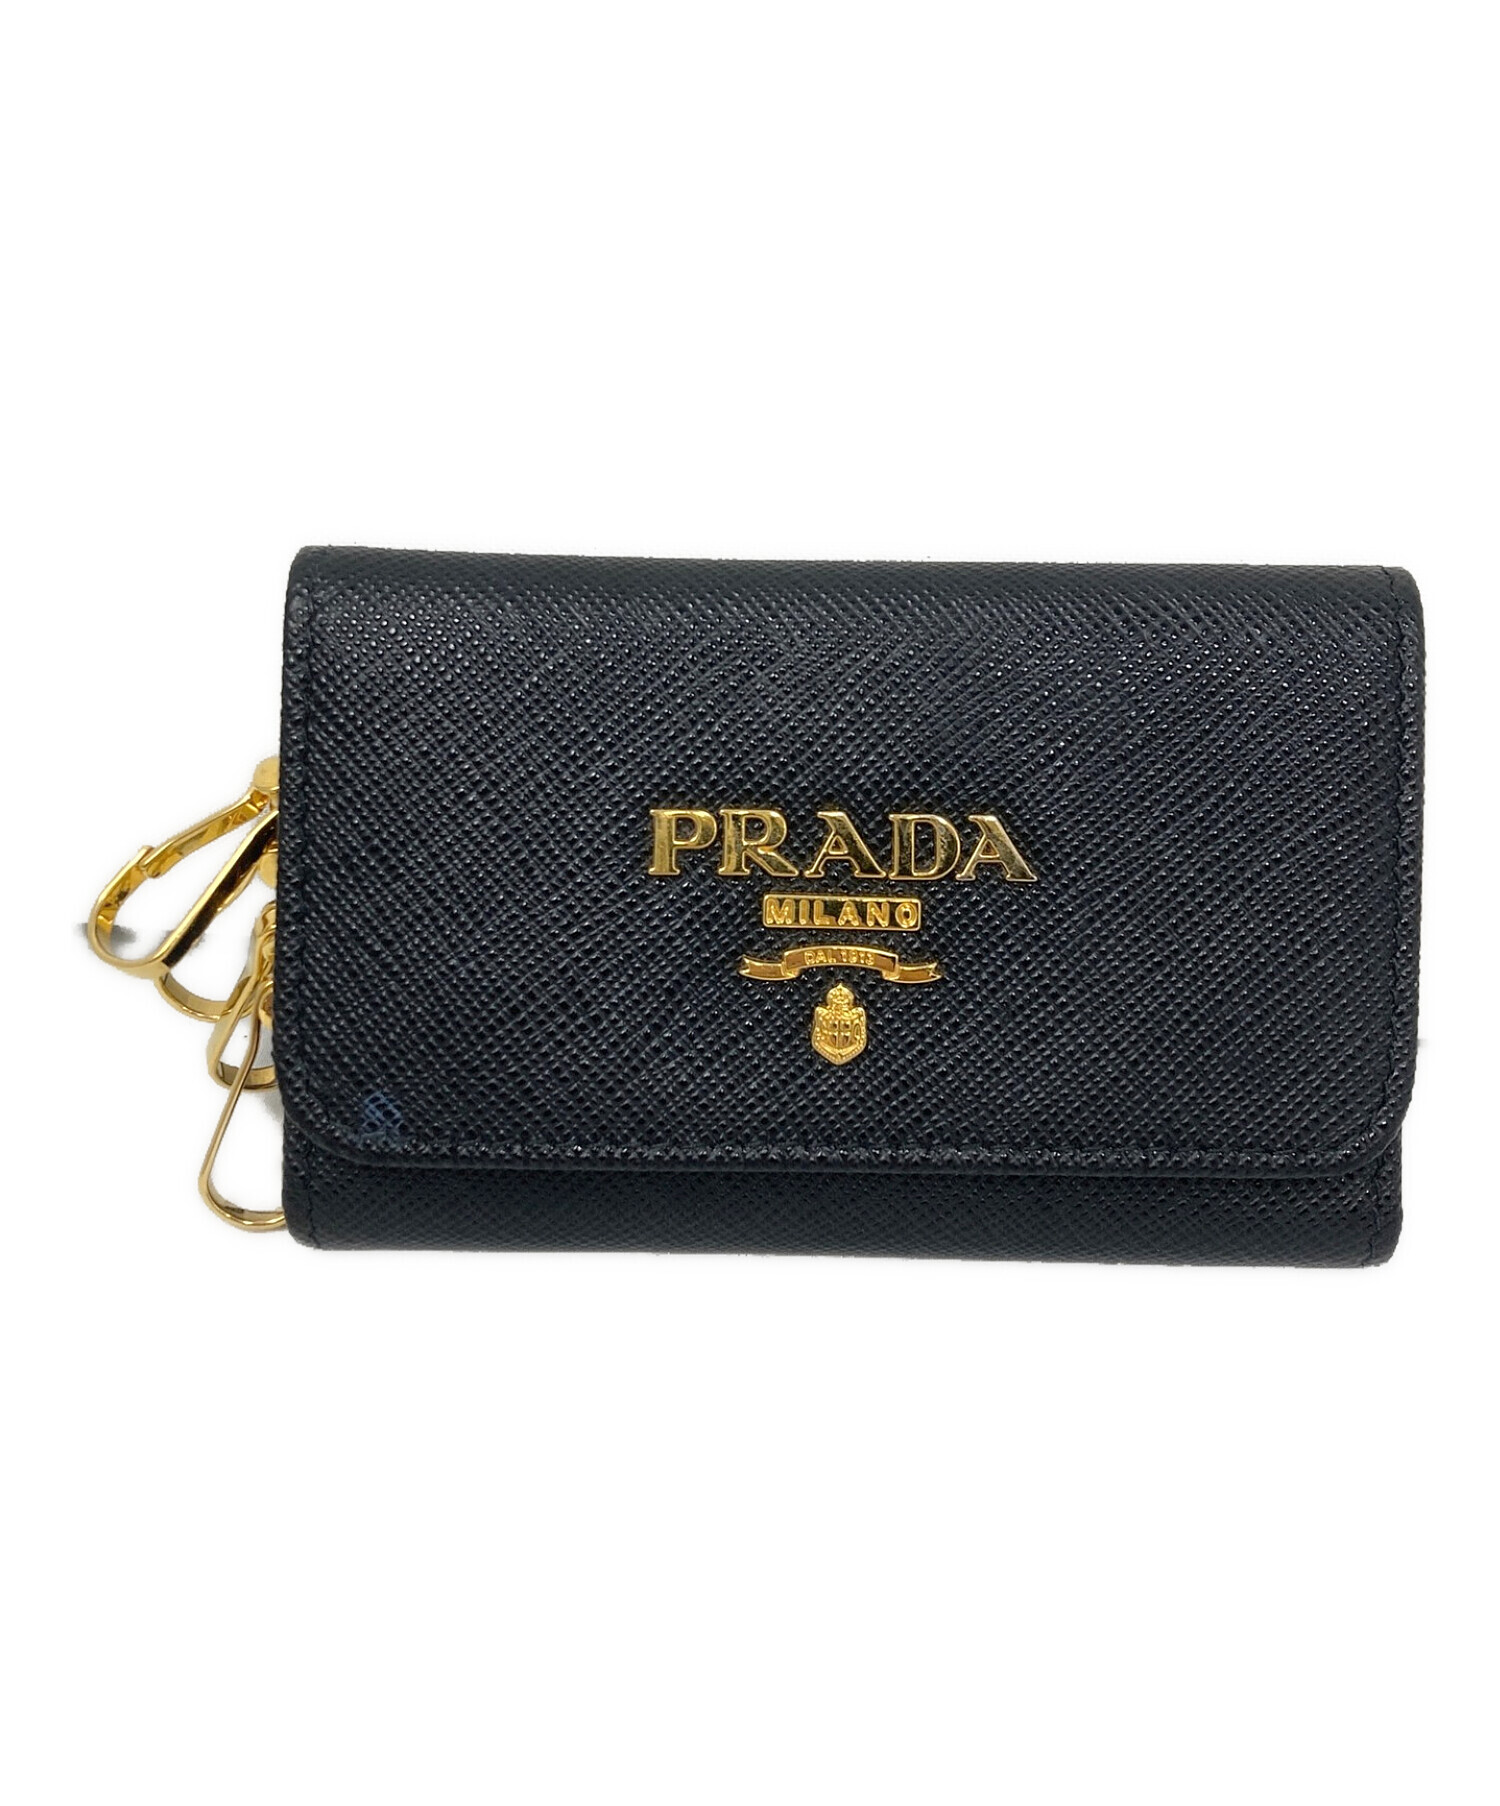 PRADA キーケースファッション小物 - キーケース